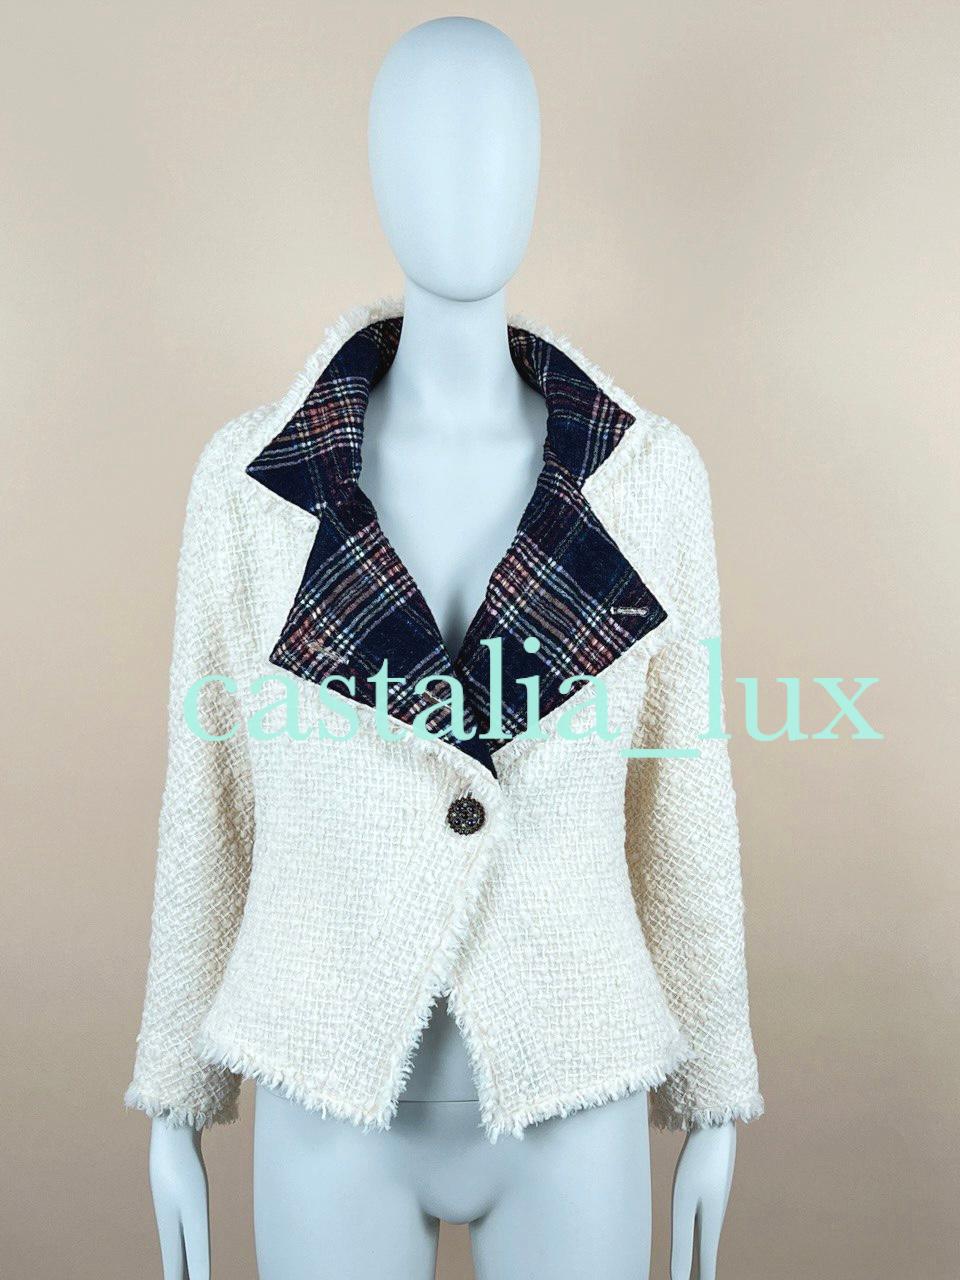 Chanel Iconic Paris / Edinburgh CC Jewel Buttons Tweed Jacket For Sale 8